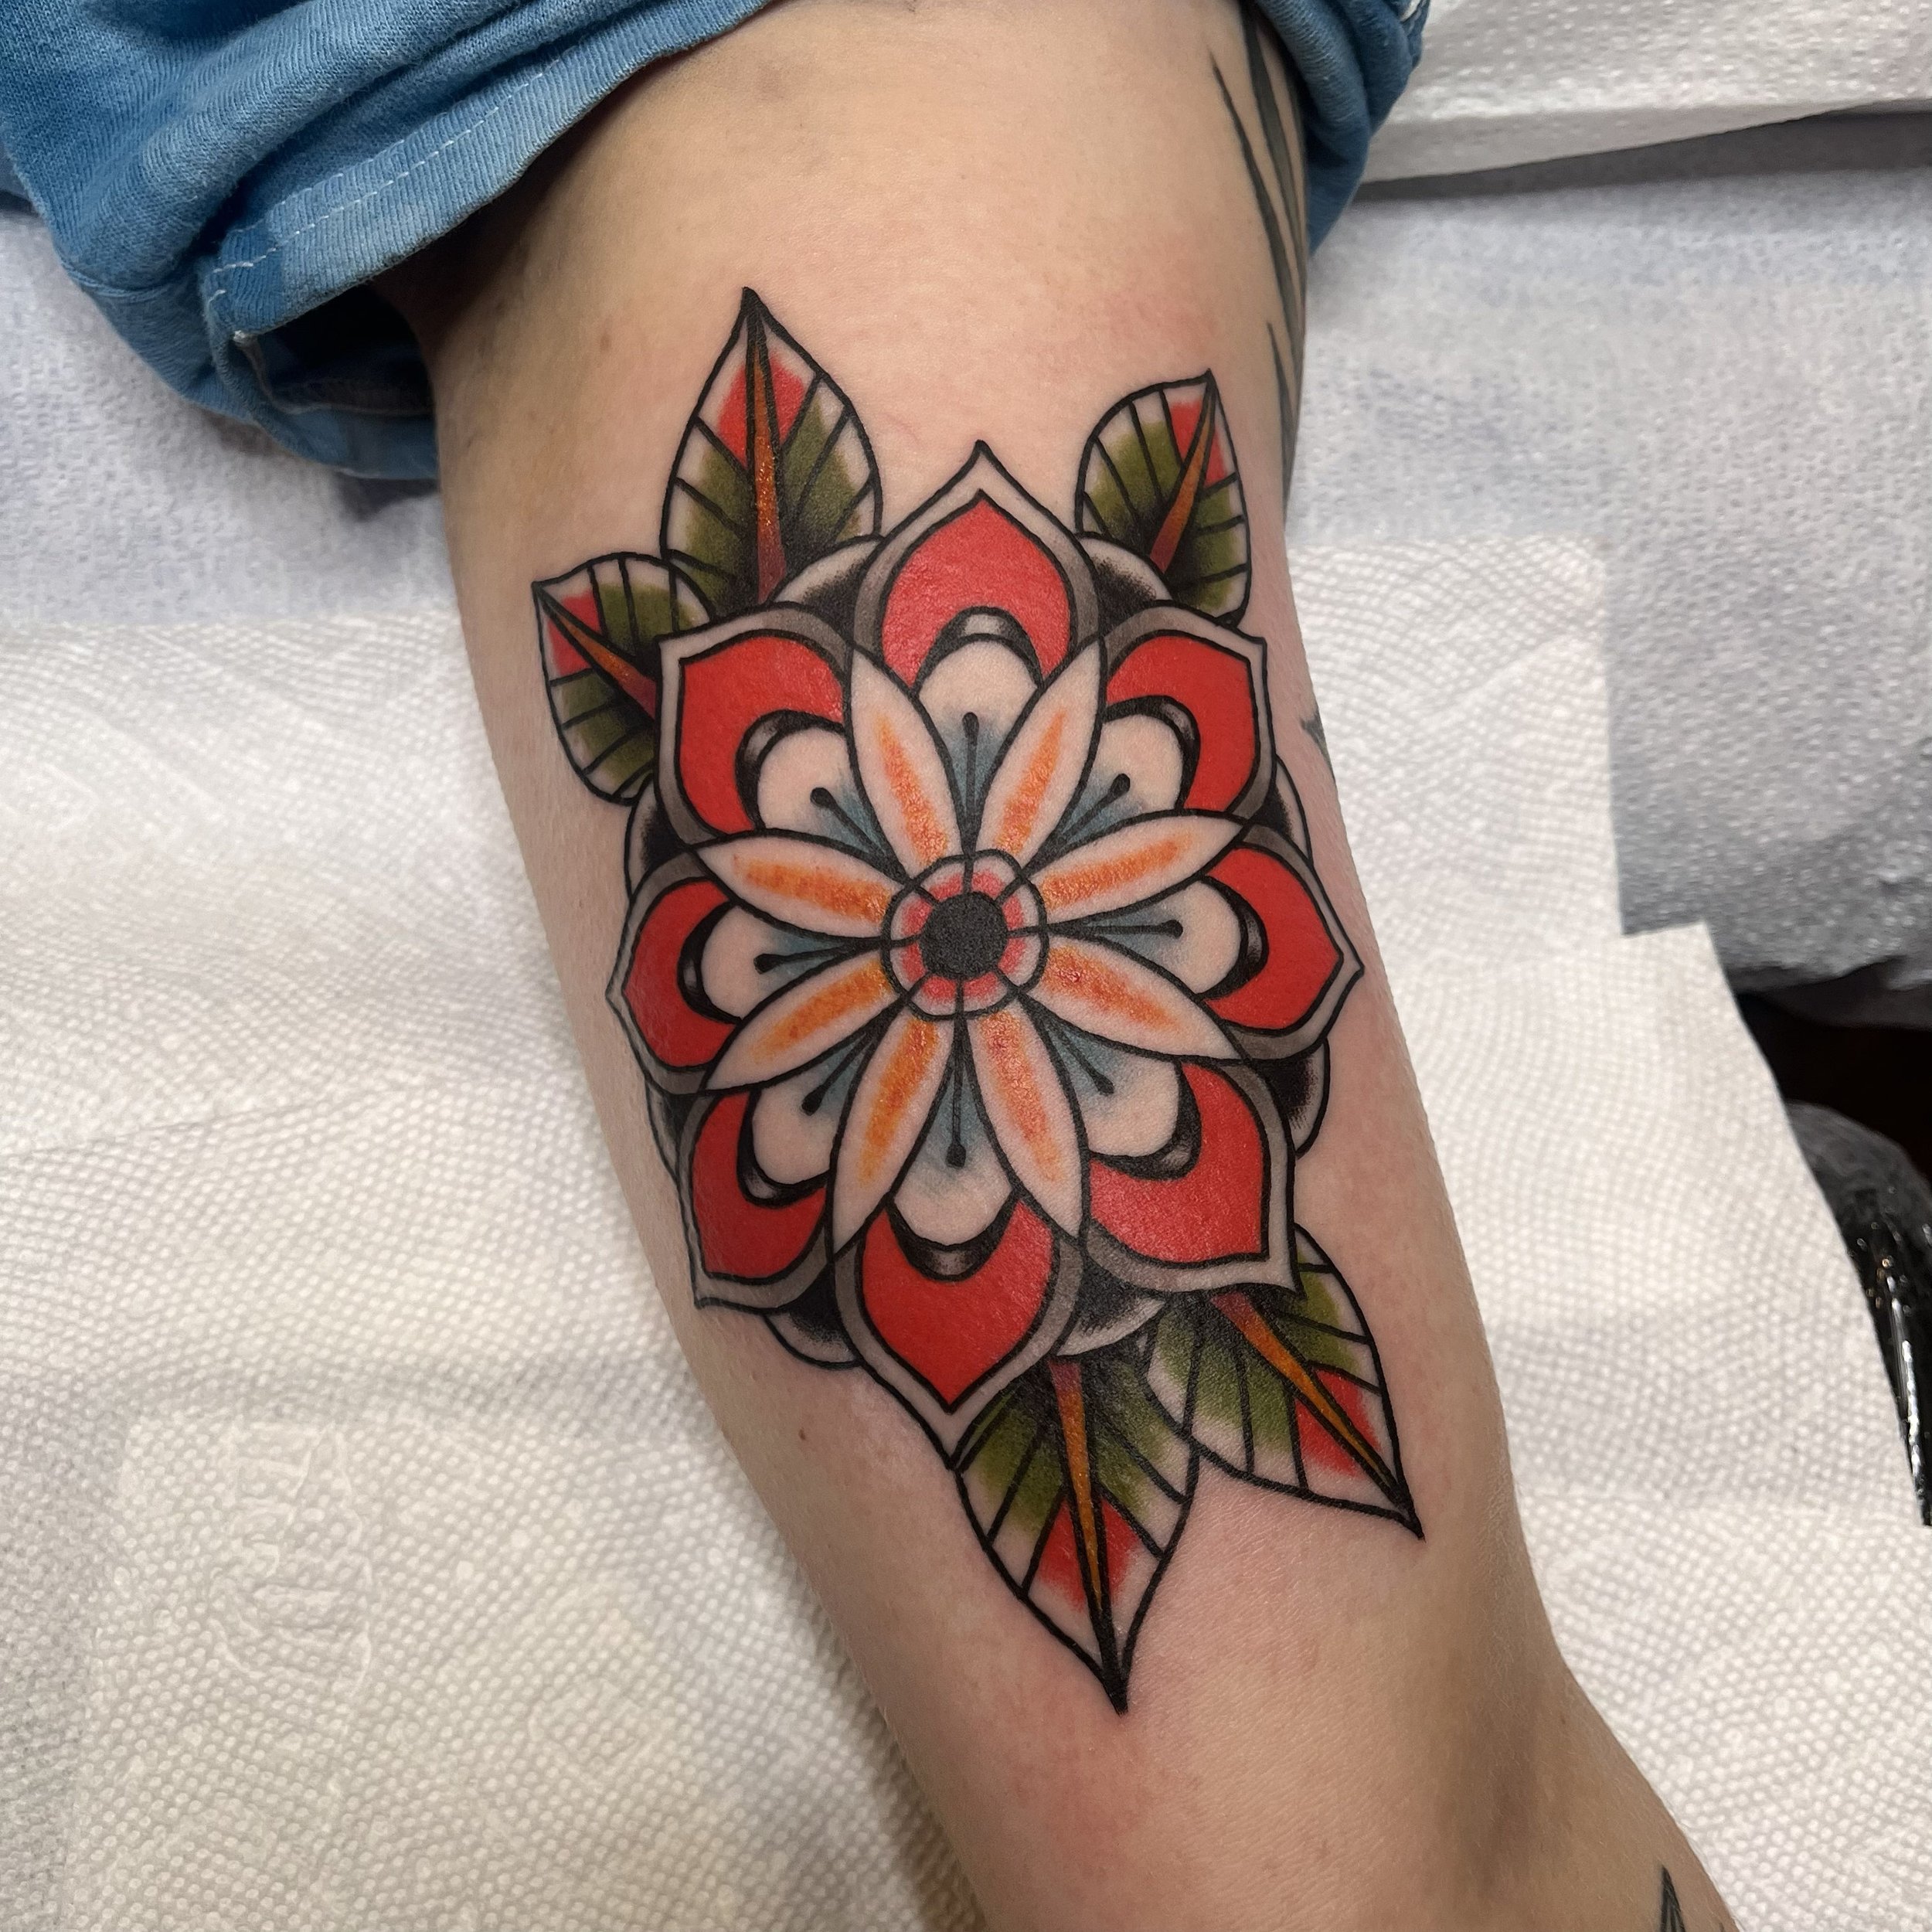 Zach-Gonzalez-Flower-Tattoo-Great-Wave-Tattoo-Austin-Texasimg2.jpg